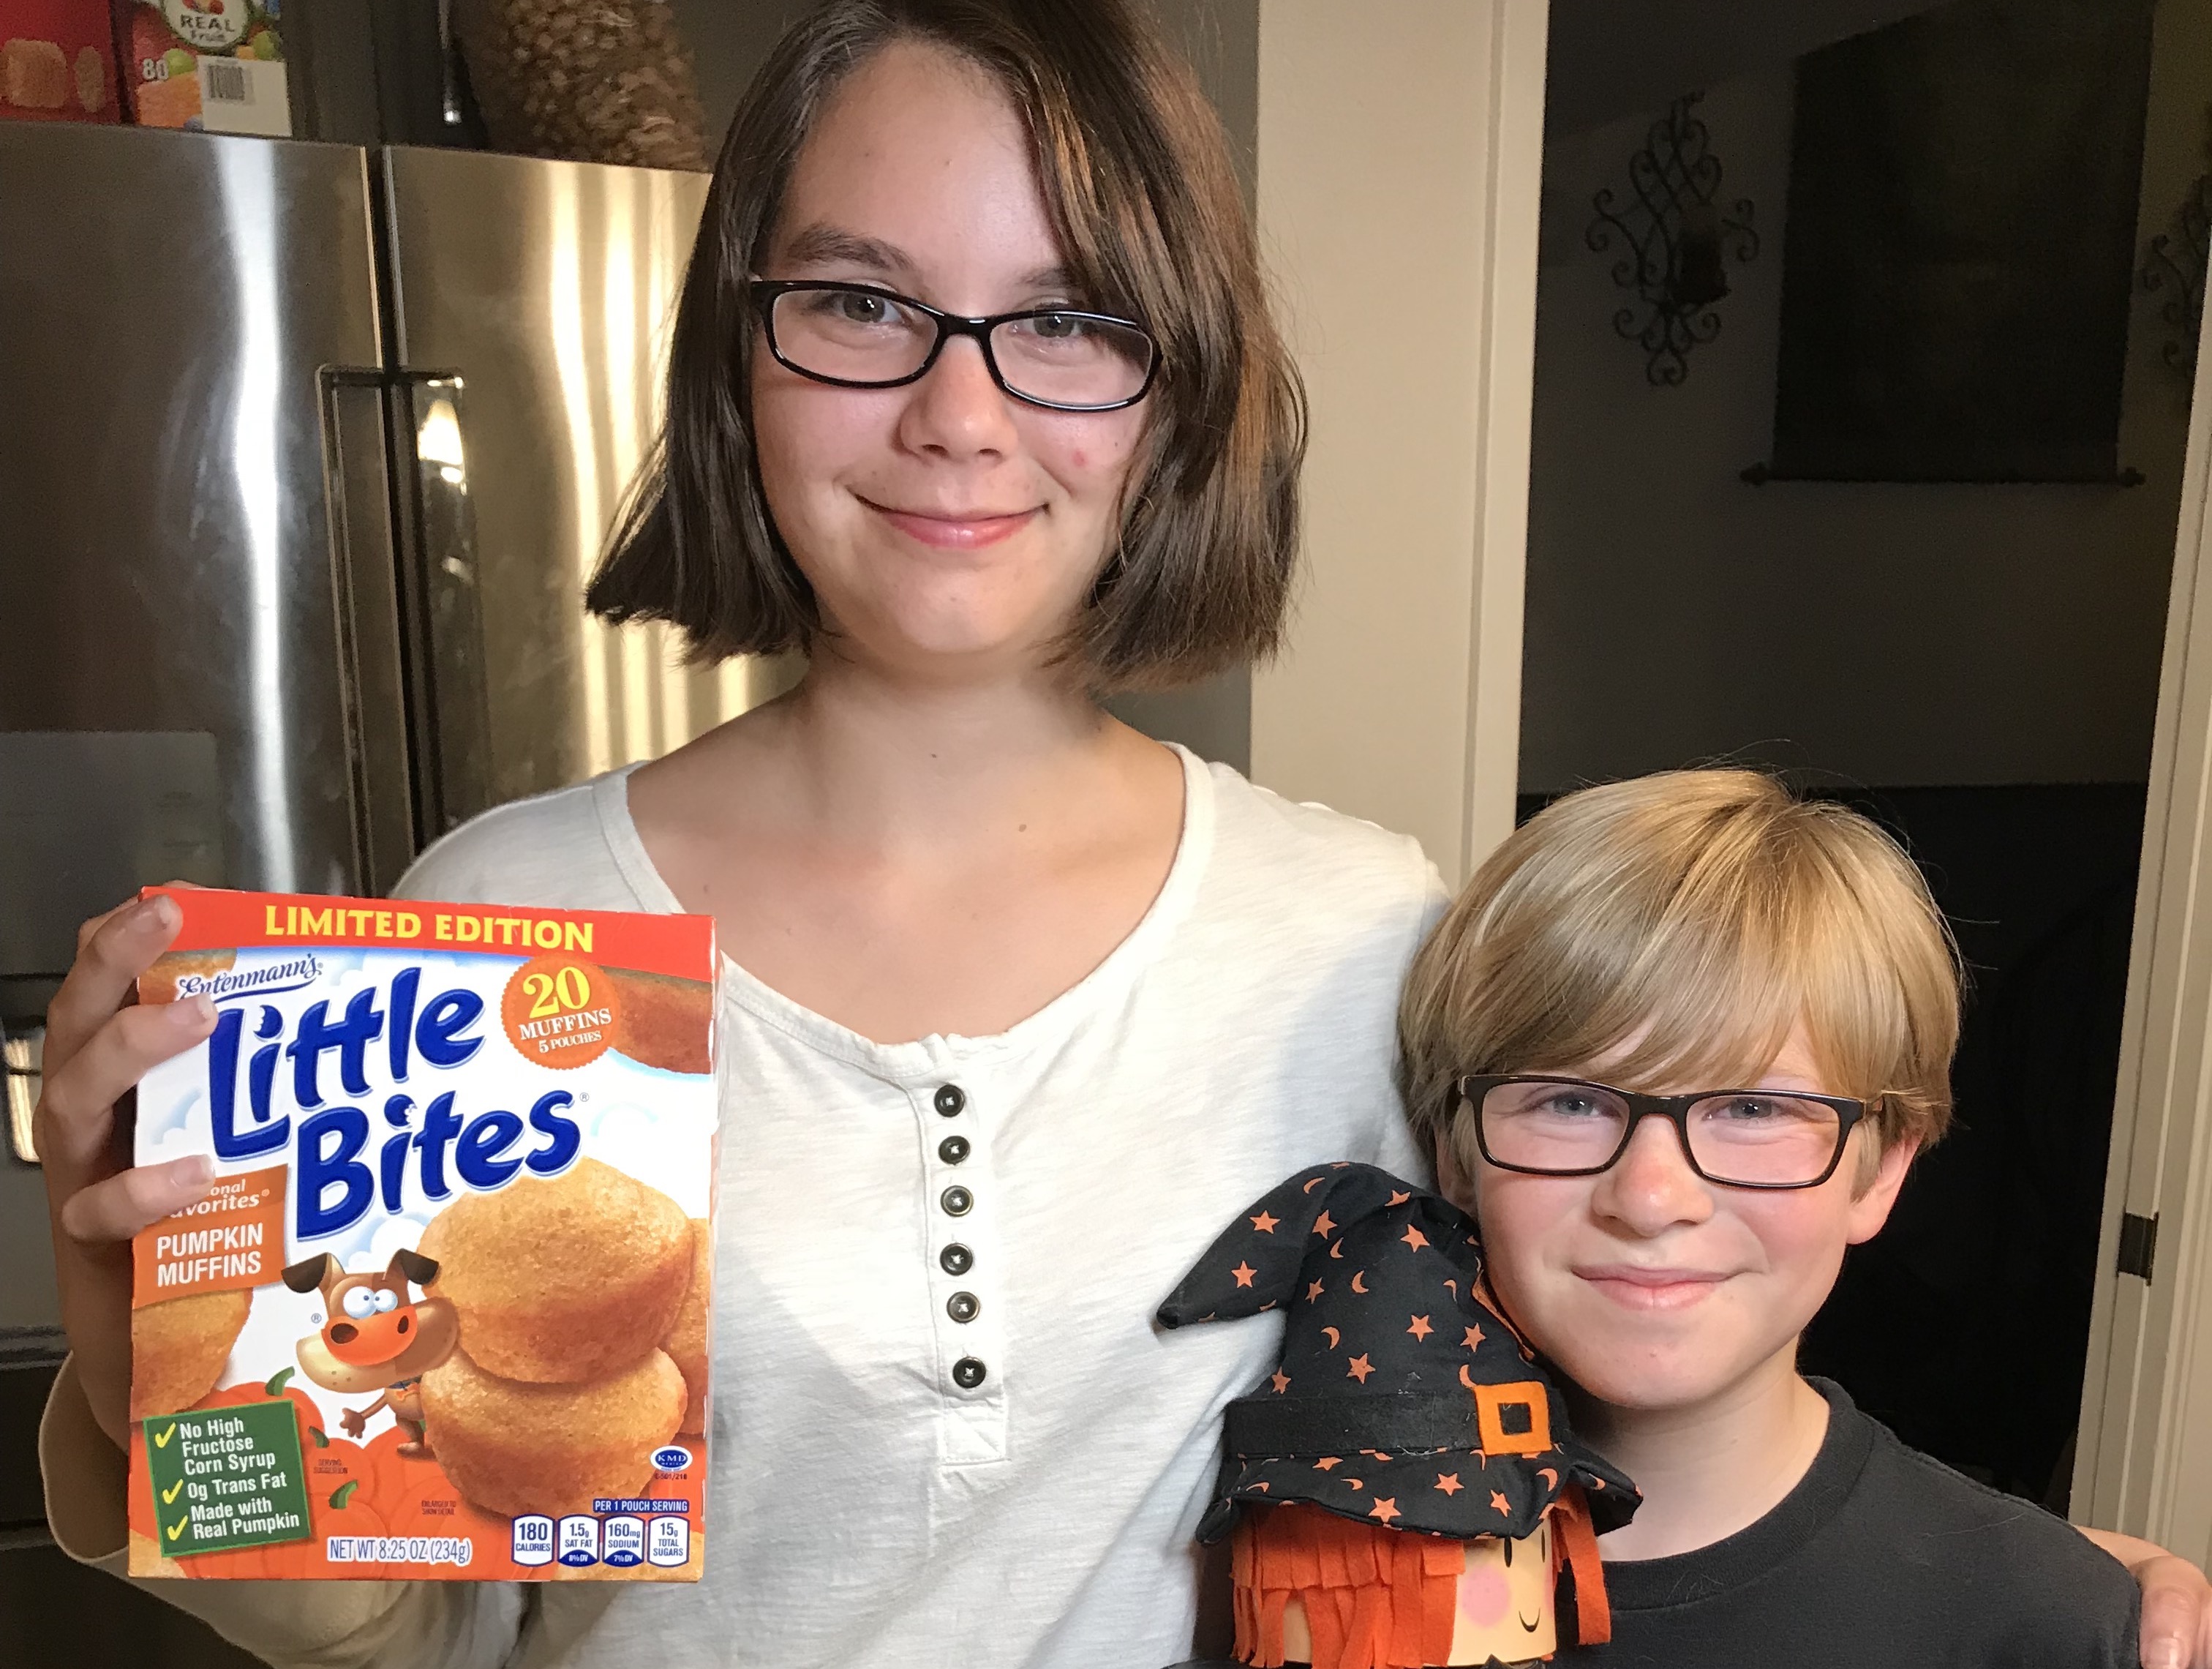 Little Bites Pumpkin #LittleBites #Entenmanns #food #foodie #giveaway #ad